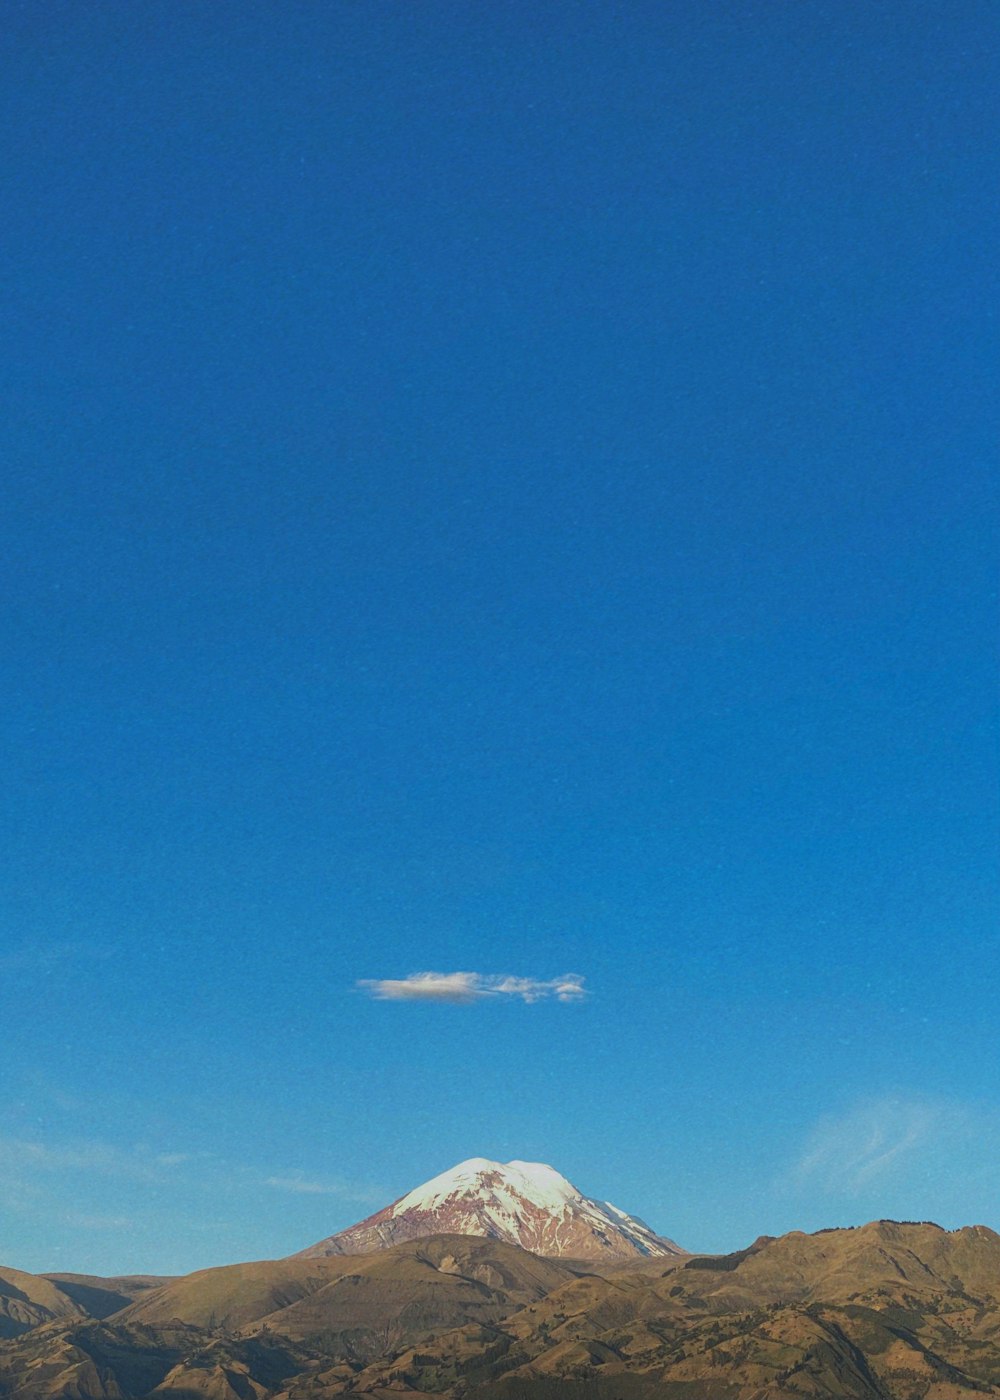 a mountain with a blue sky